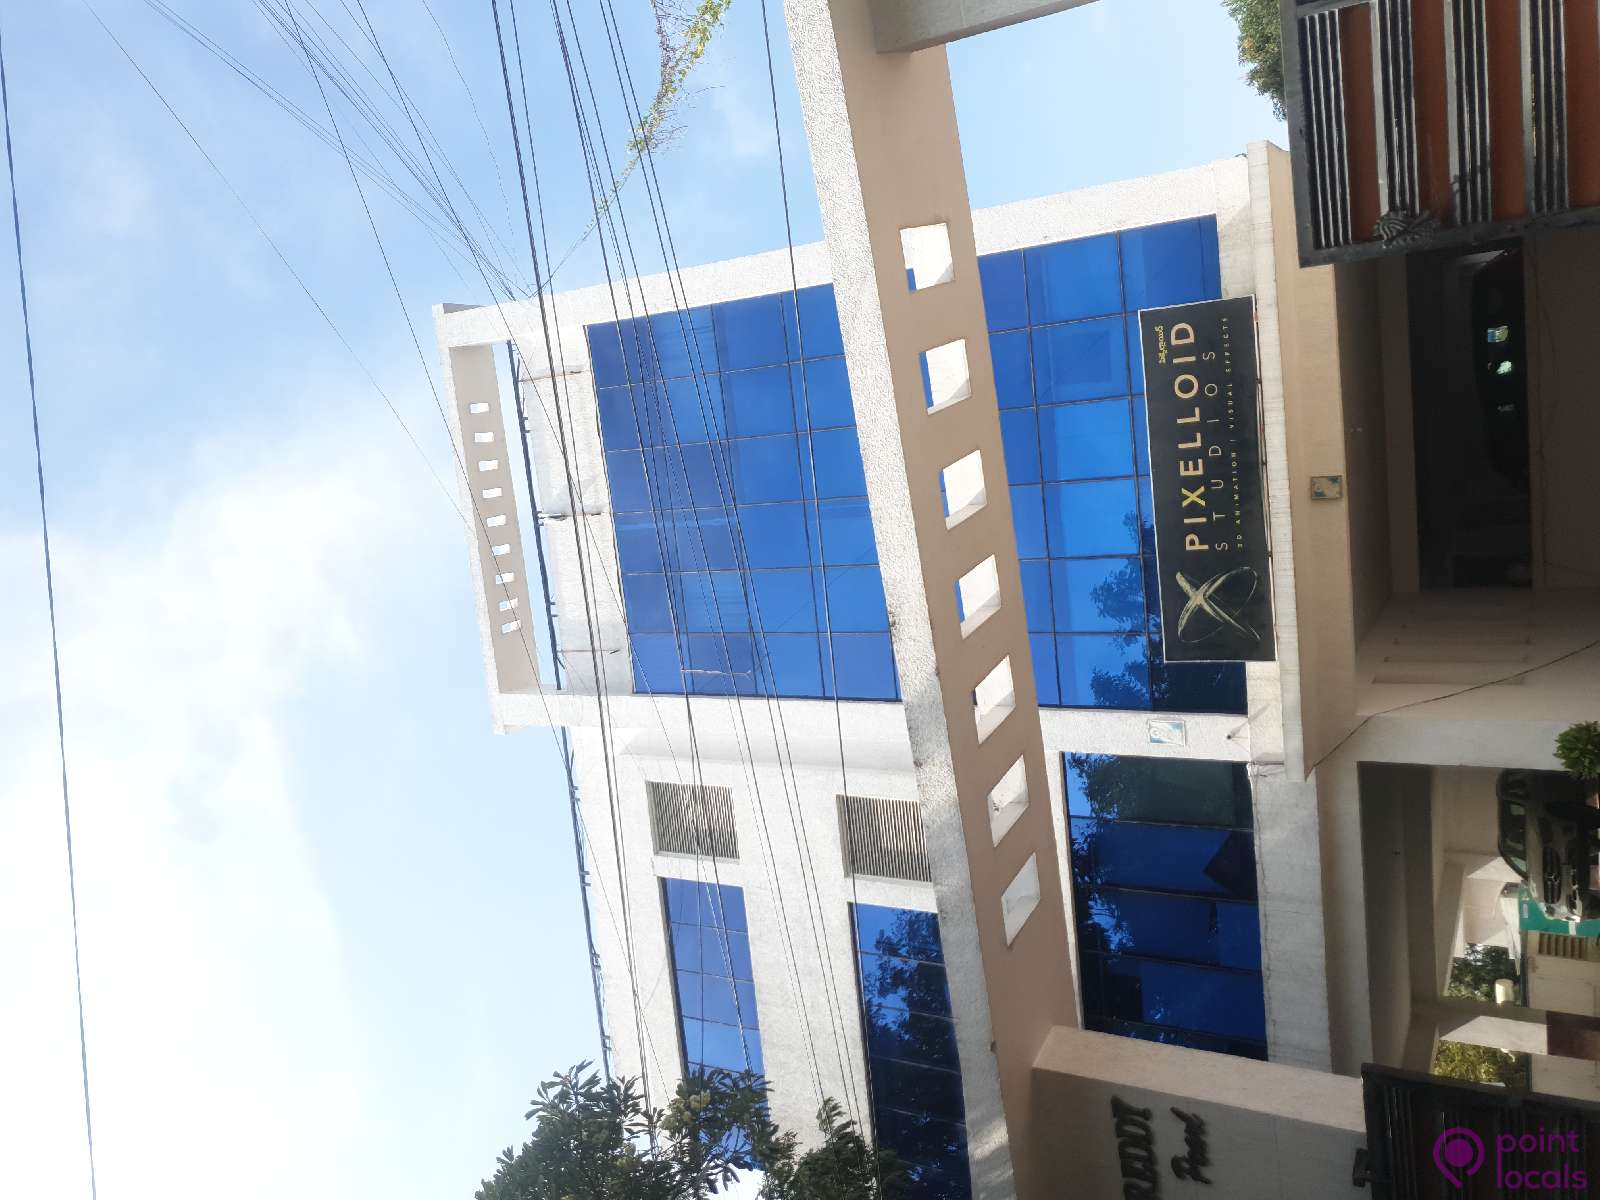 Pixelloid Studios - Animation Institution in Hyderabad,Telangana |  Pointlocals